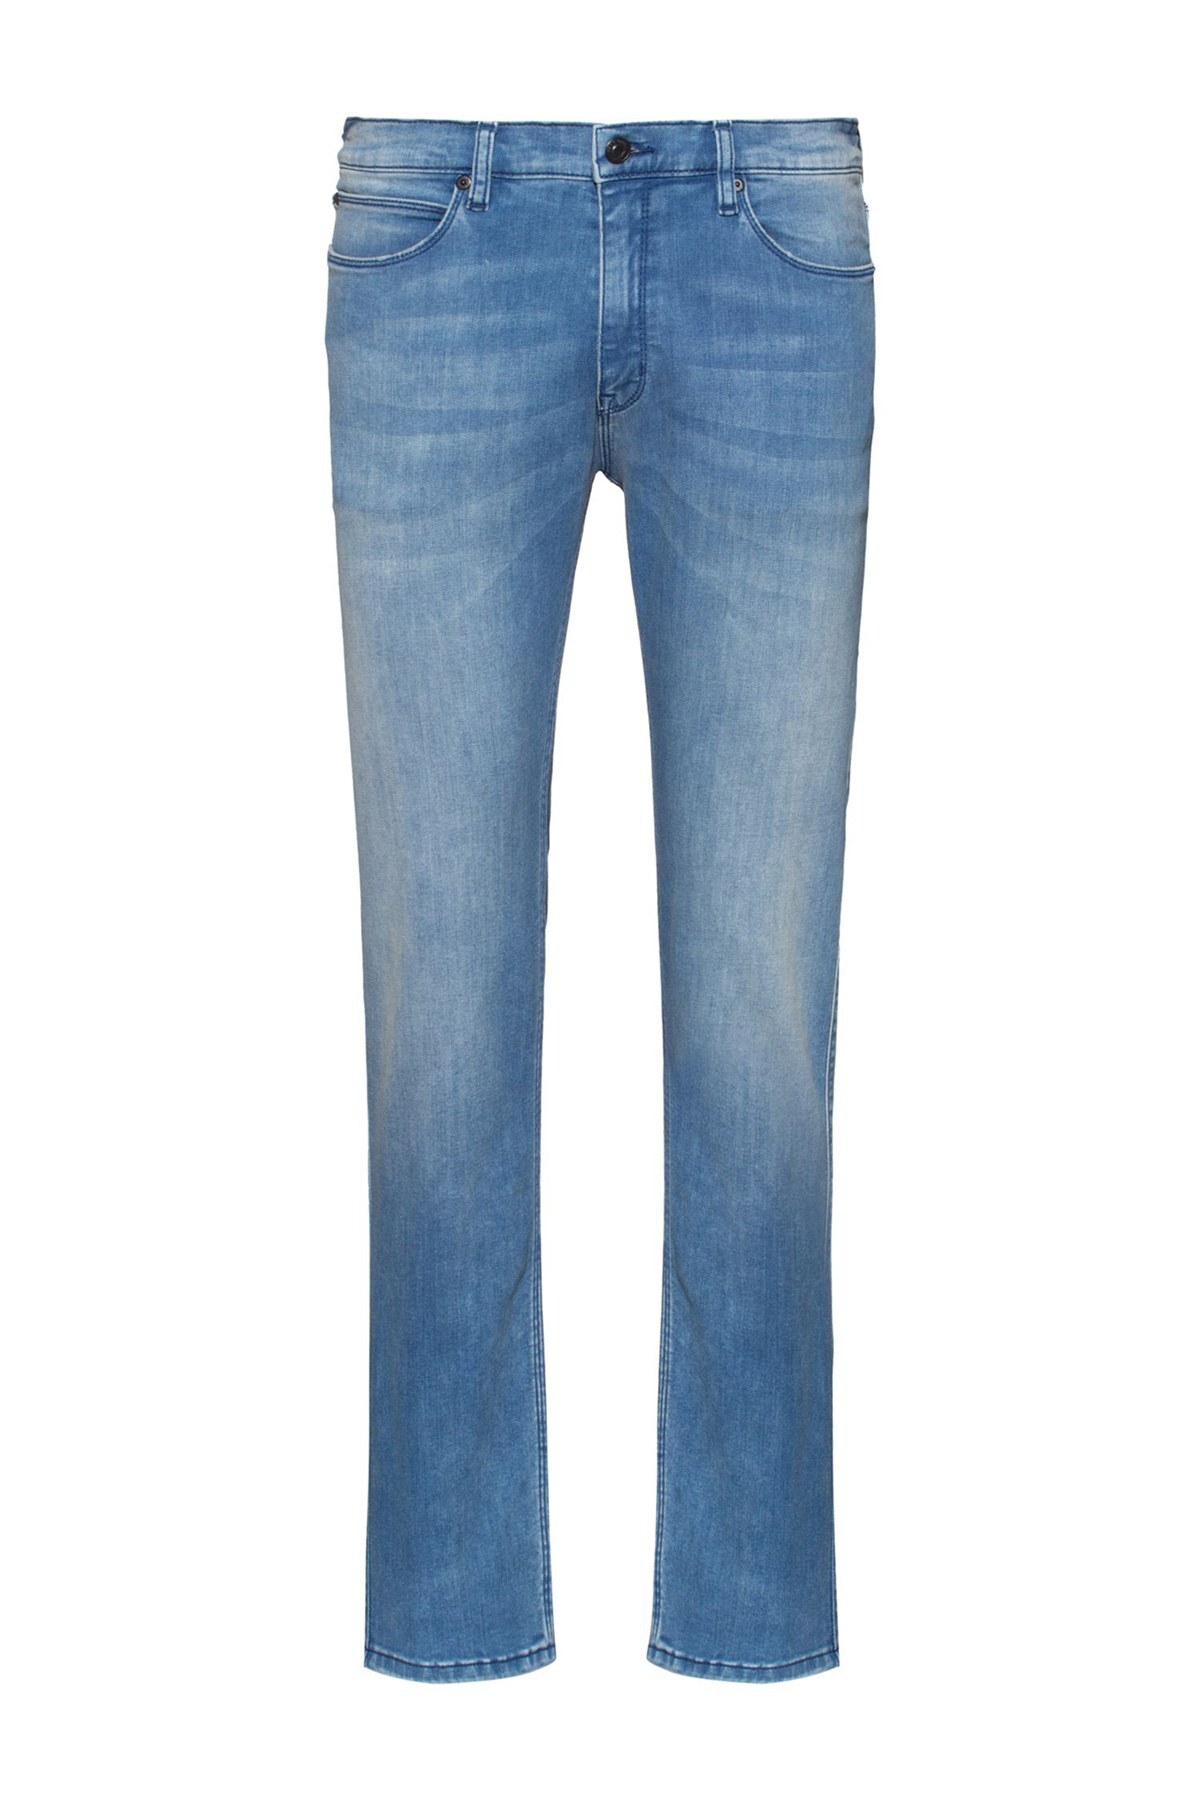 Hugo Boss Pamuklu Slim Fit Jeans Erkek Kot Pantolon 50449226 455 MAVİ